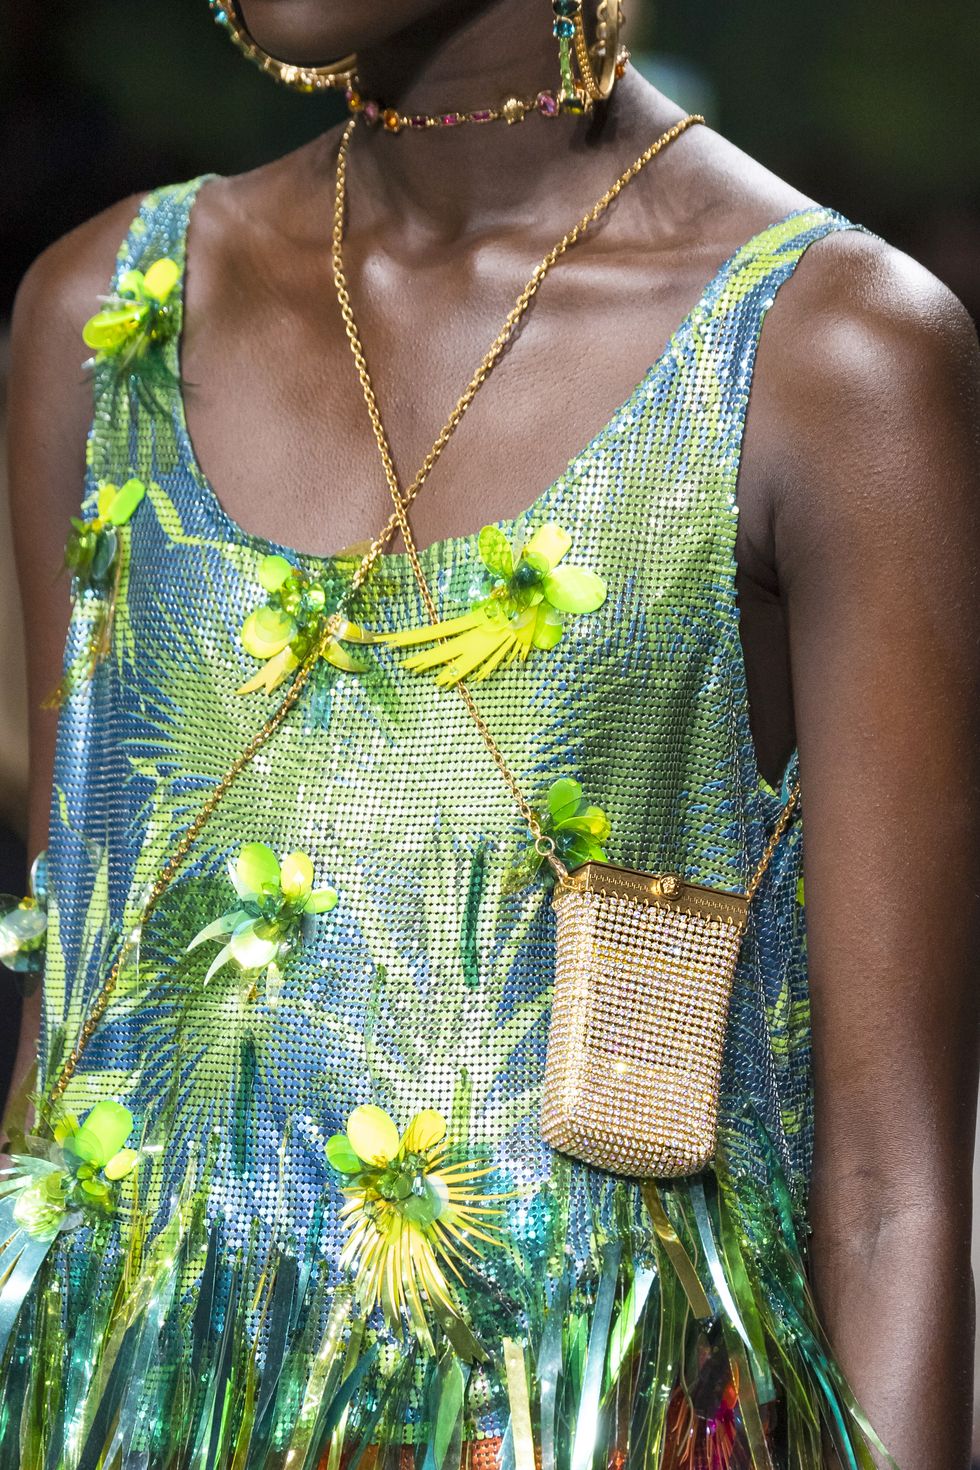 Mini bags are spring 2020's biggest fashion trend